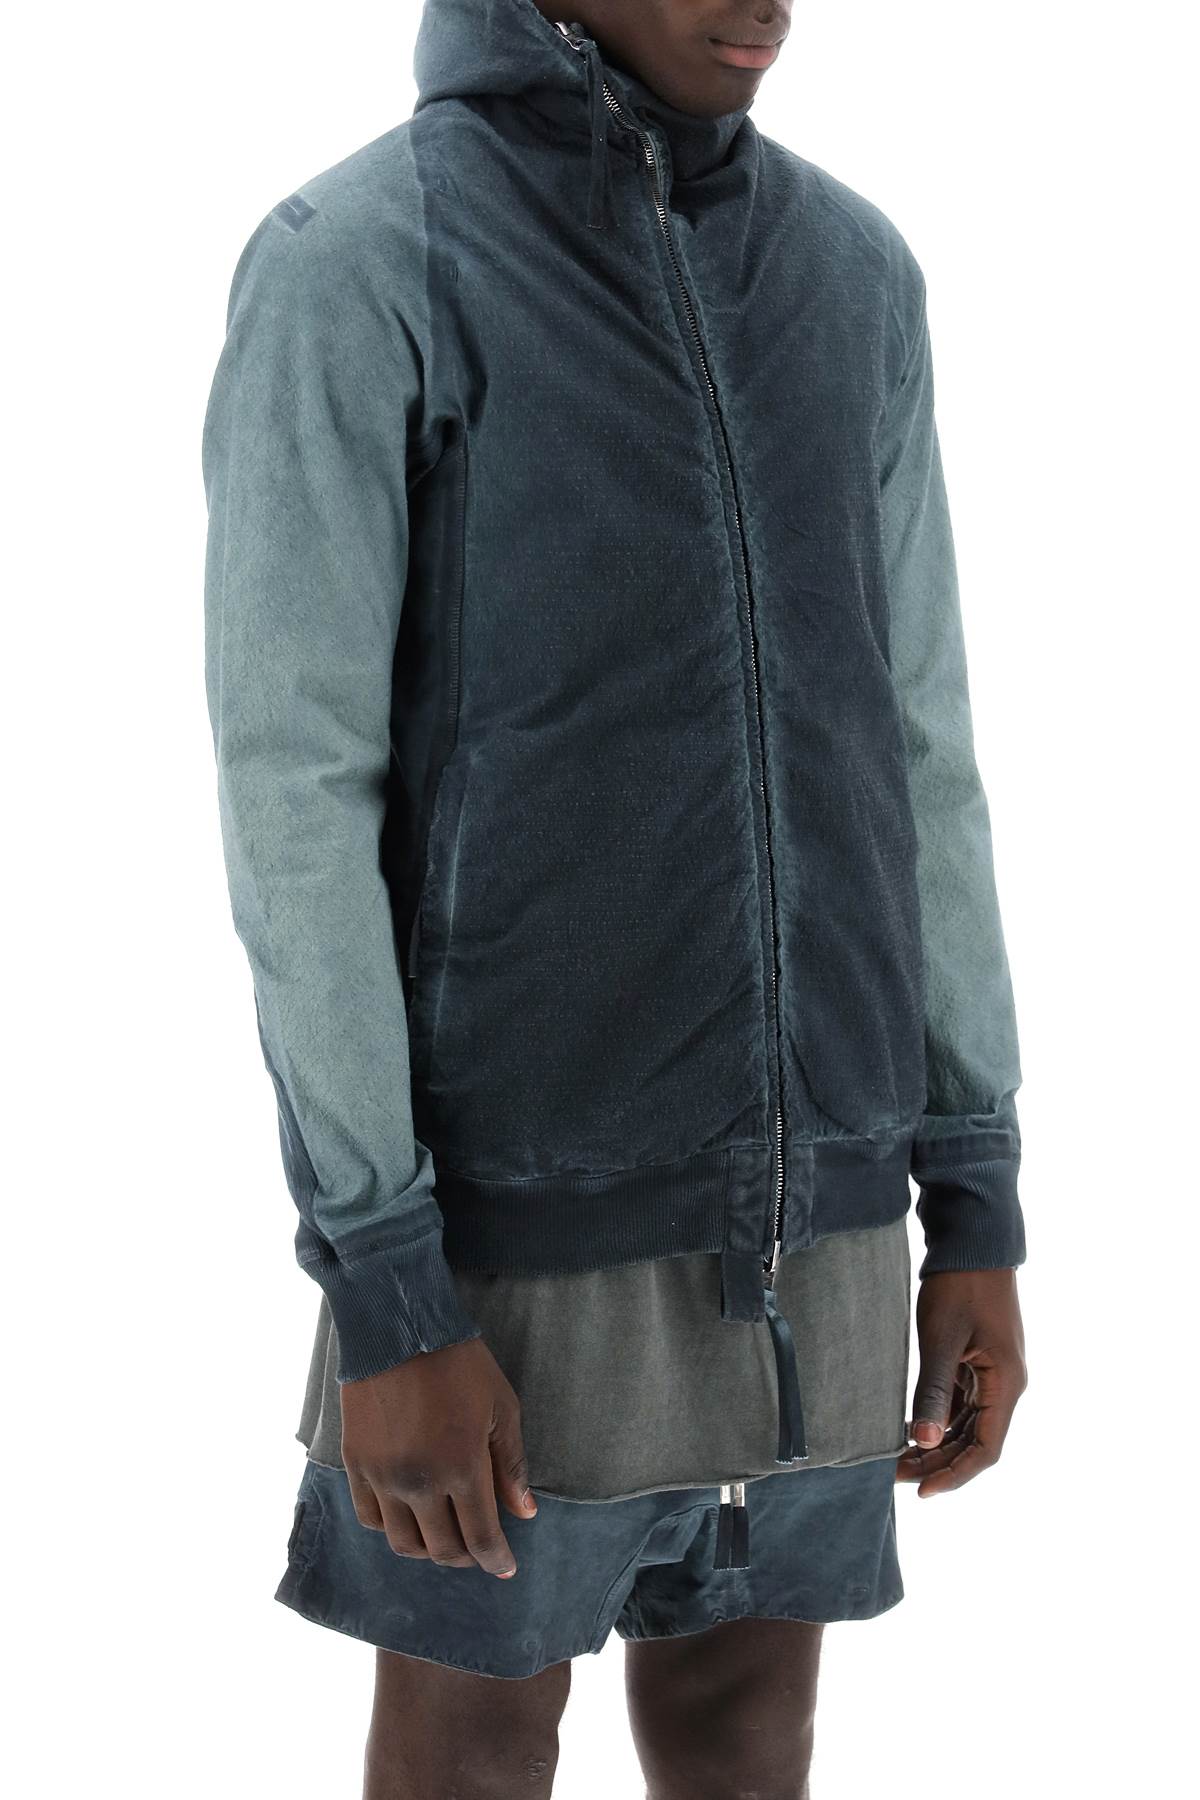 Boris bidjan saberi hybrid sweatshirt with zip and hood-1